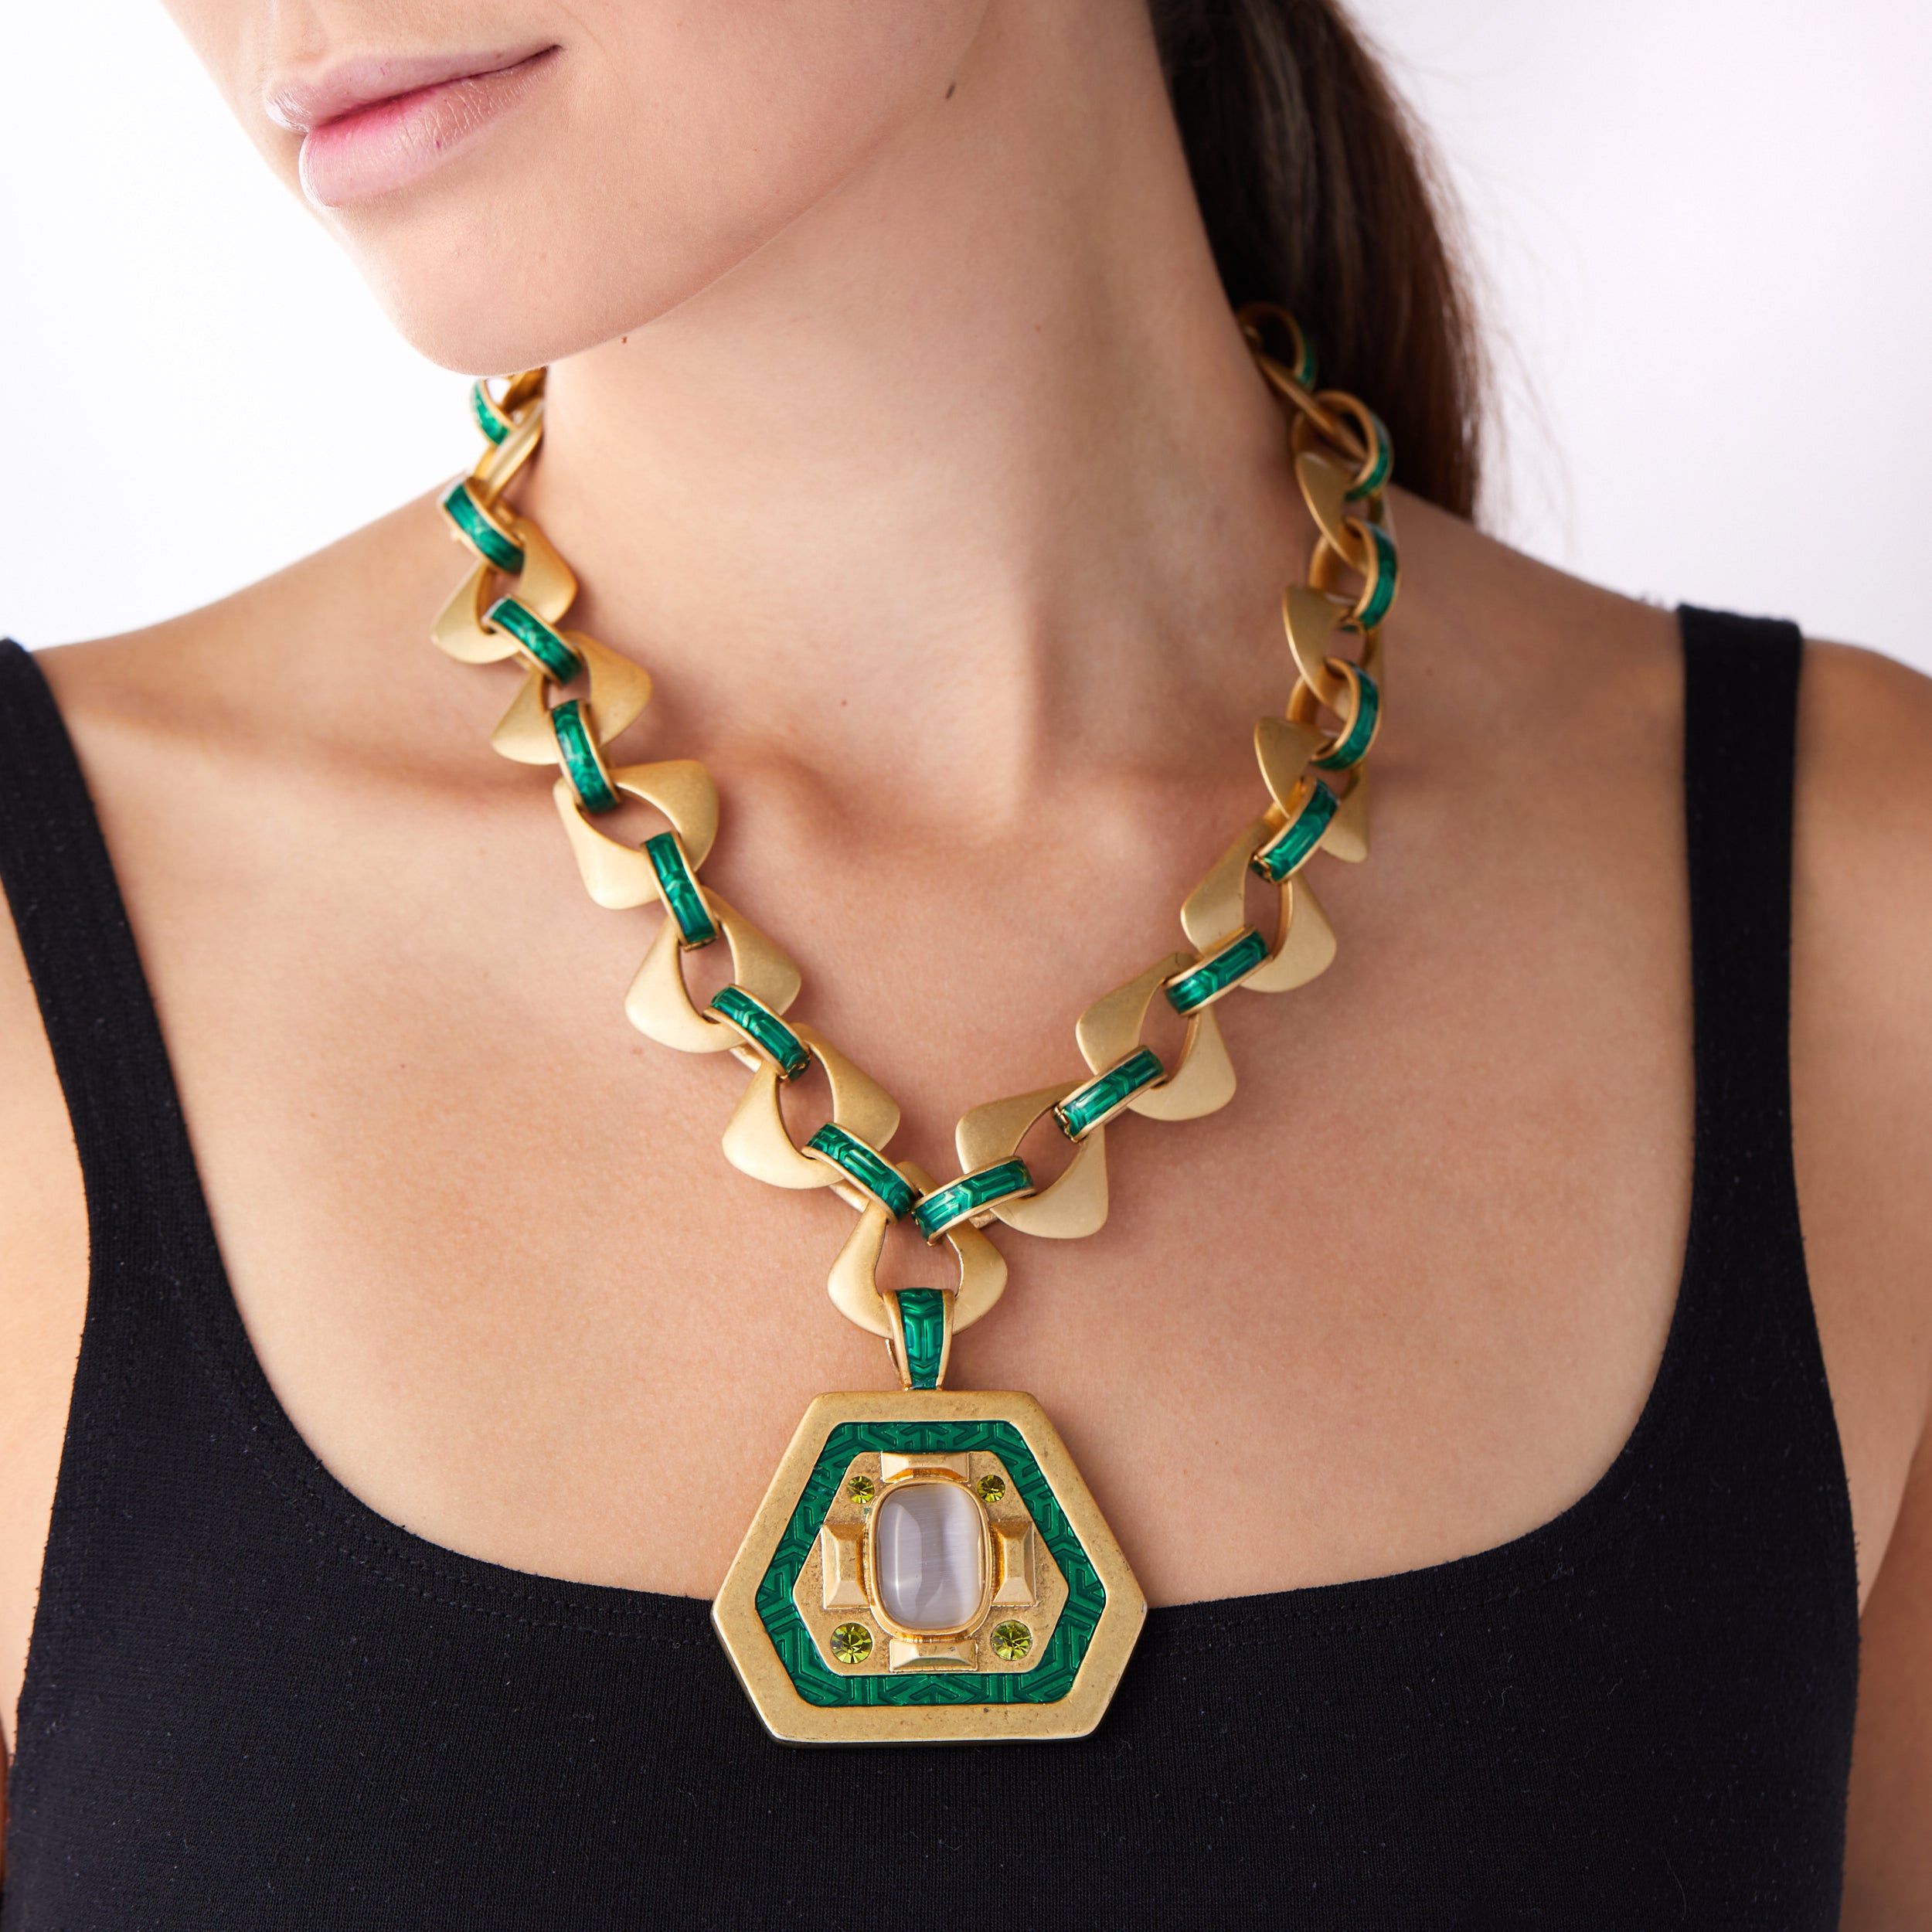 Woman wearing a vintage medallion pendant necklace